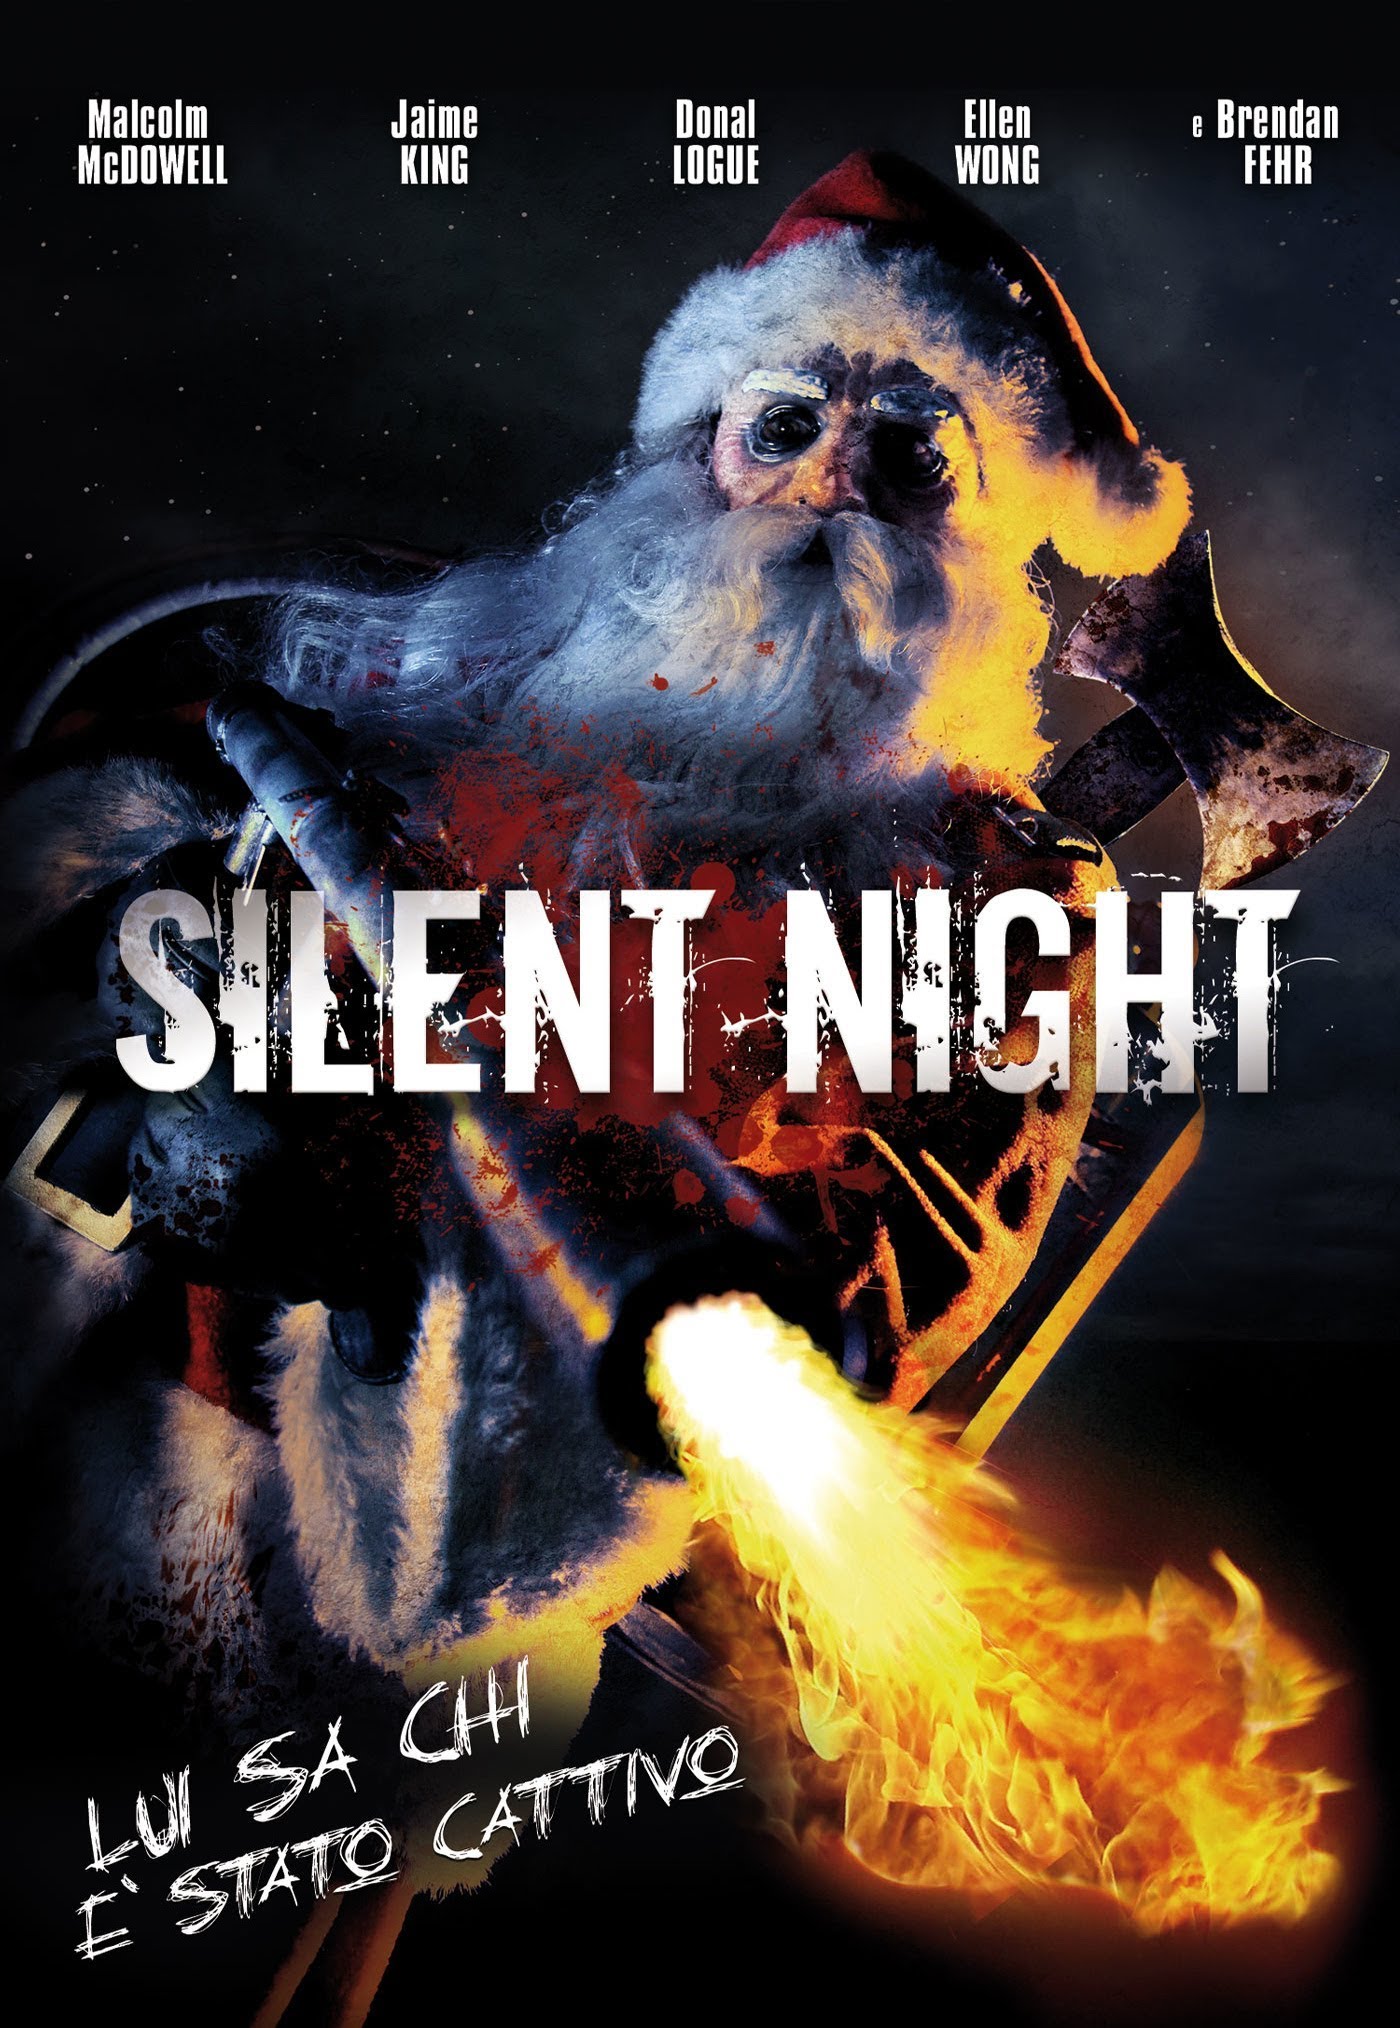 Silent Night [HD] (2012)